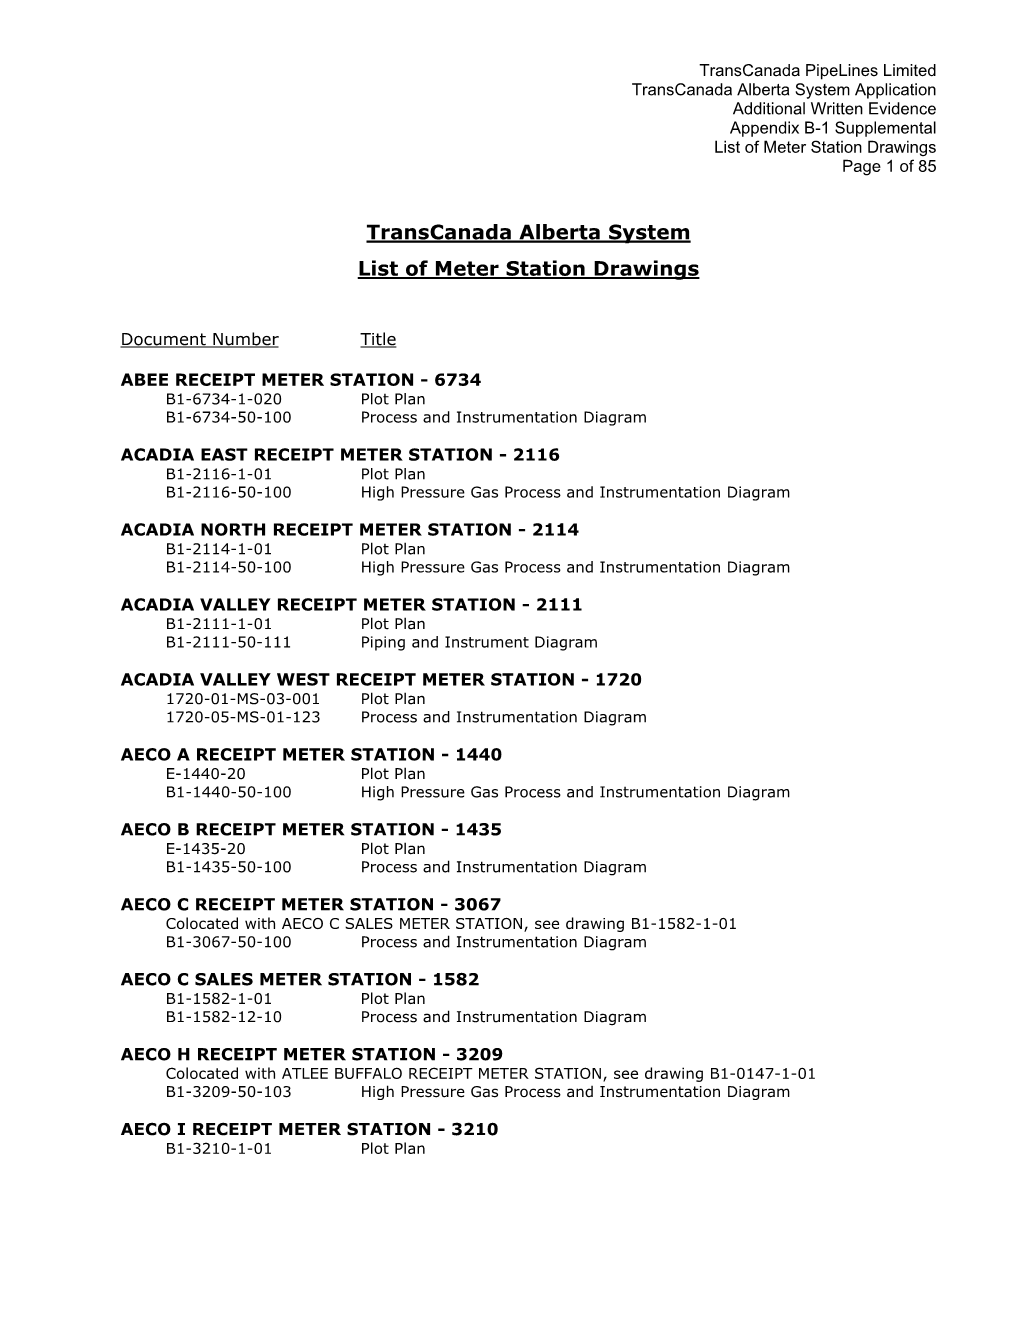 Transcanada Alberta System List of Meter Station Drawings